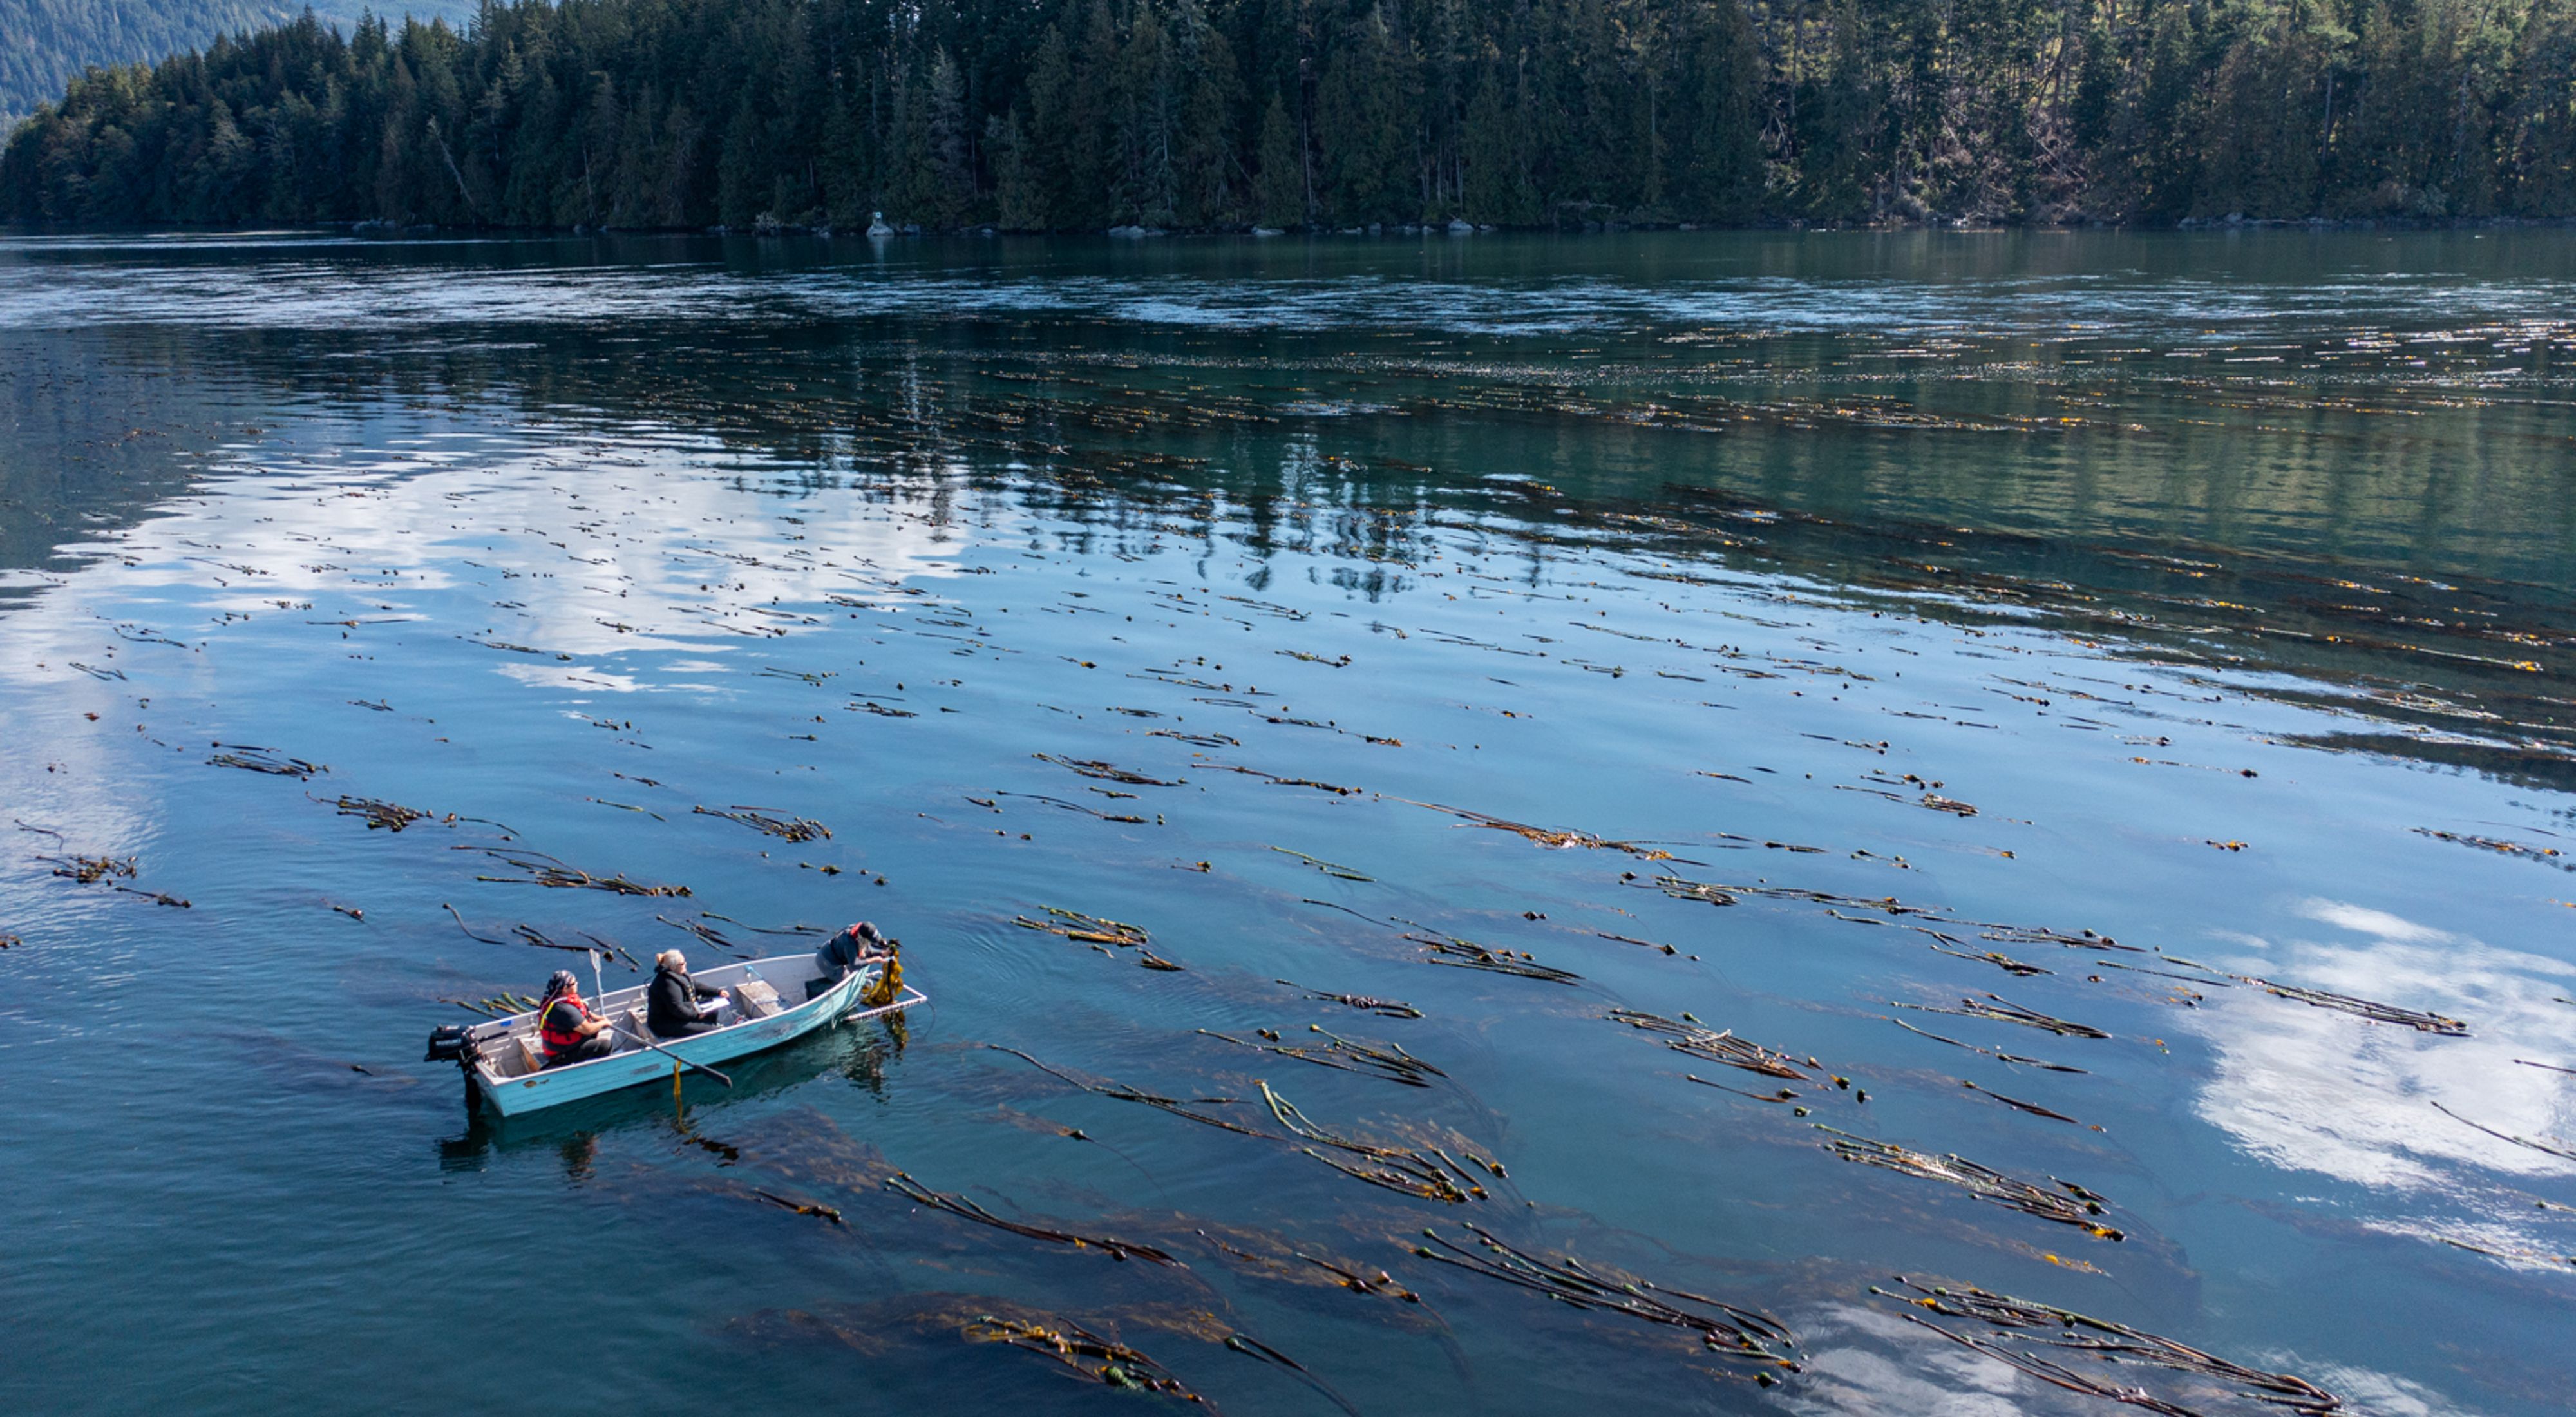 People in a boat harvesting kelp from the ocean.